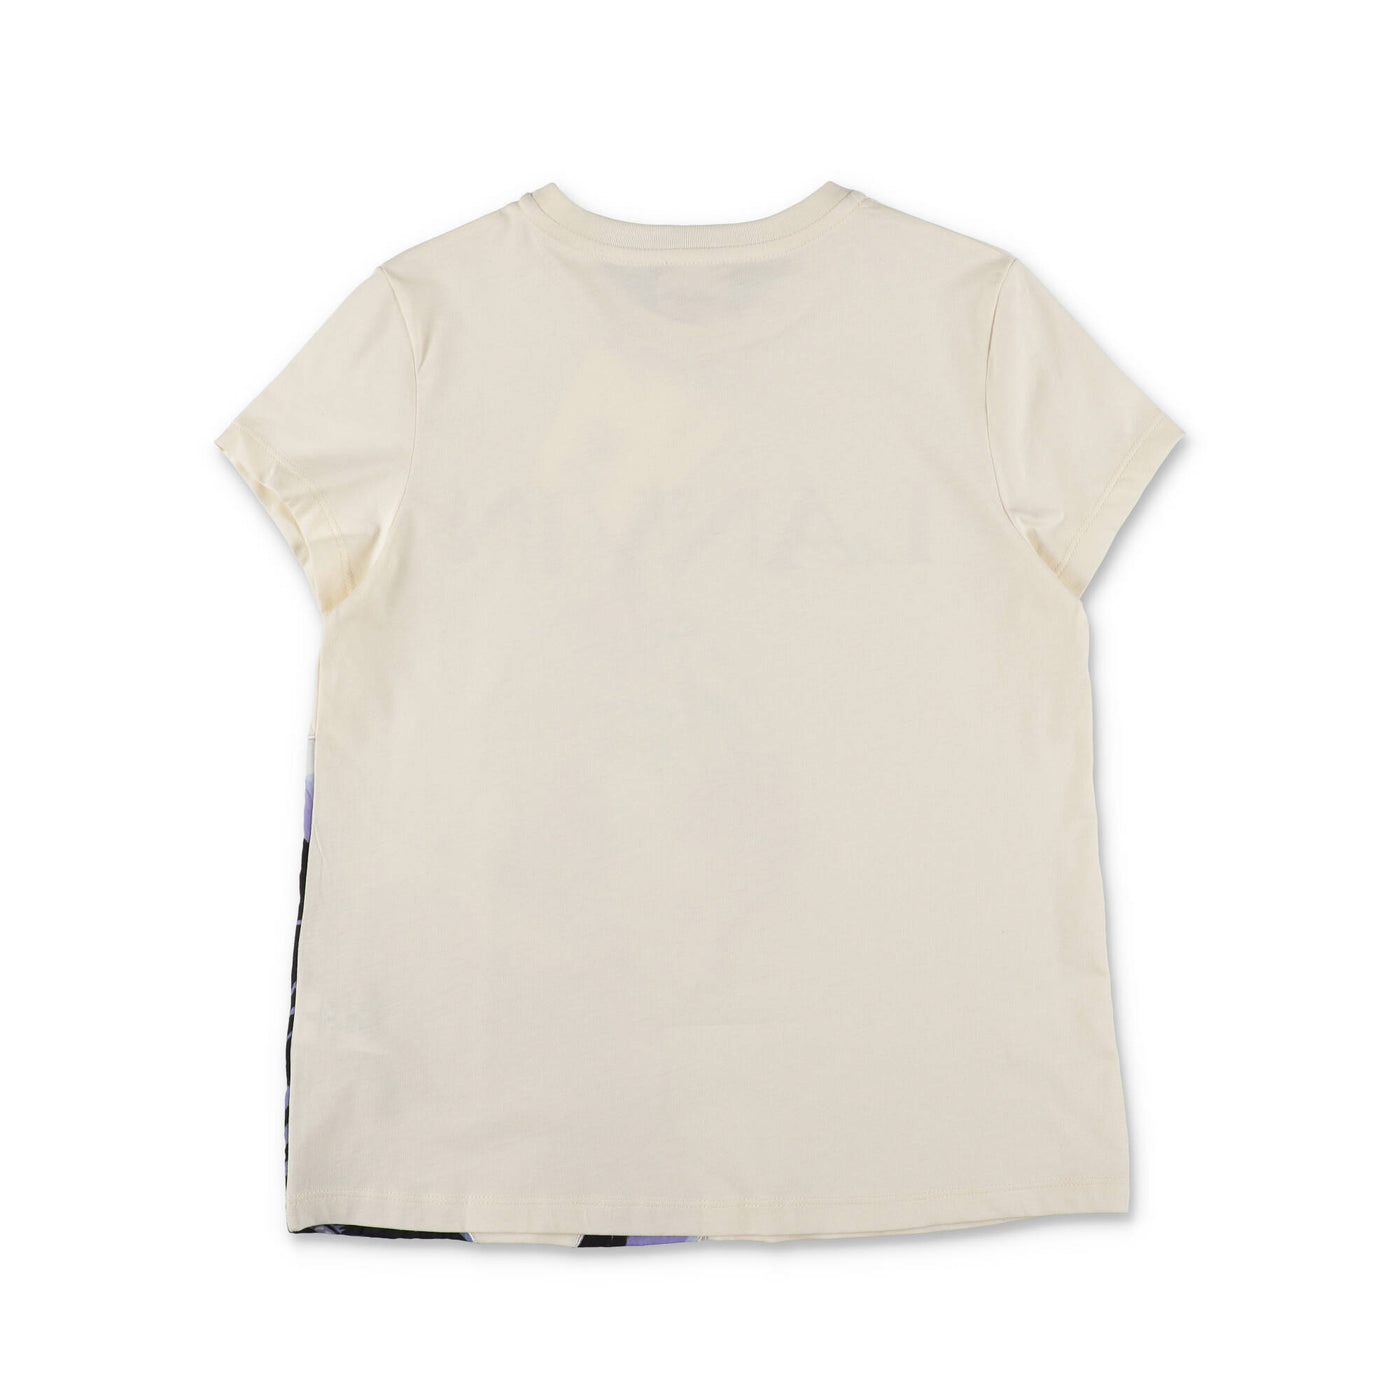 White cotton jersey girl LANVIN x BATMAN t-shirt | Carofiglio Junior